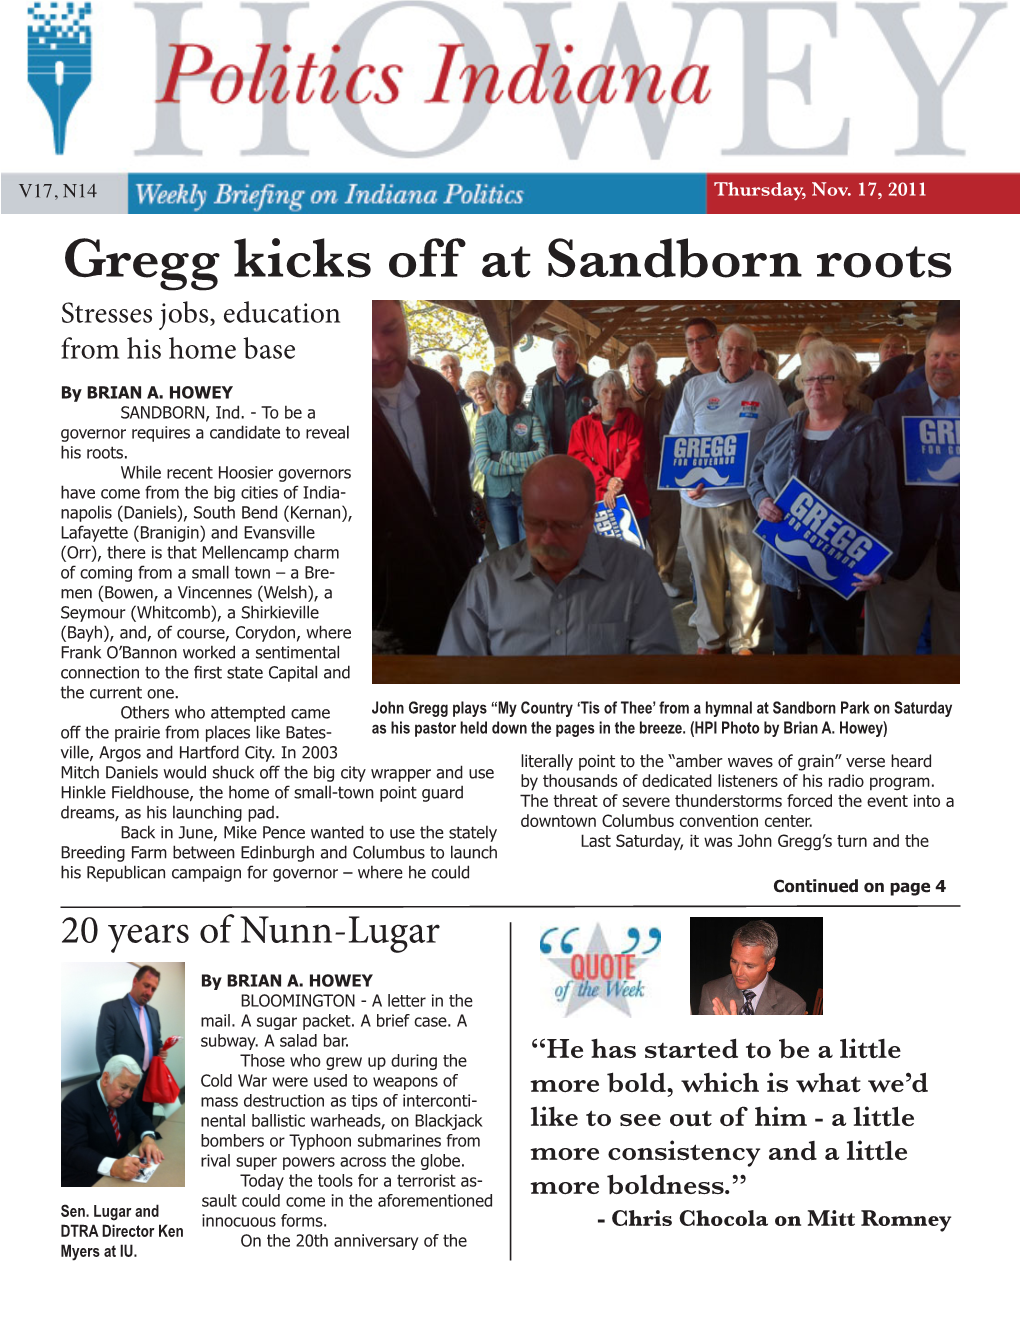 Gregg Kicks Off at Sandborn Roots Stresses Jobs, Education from His Home Base by BRIAN A